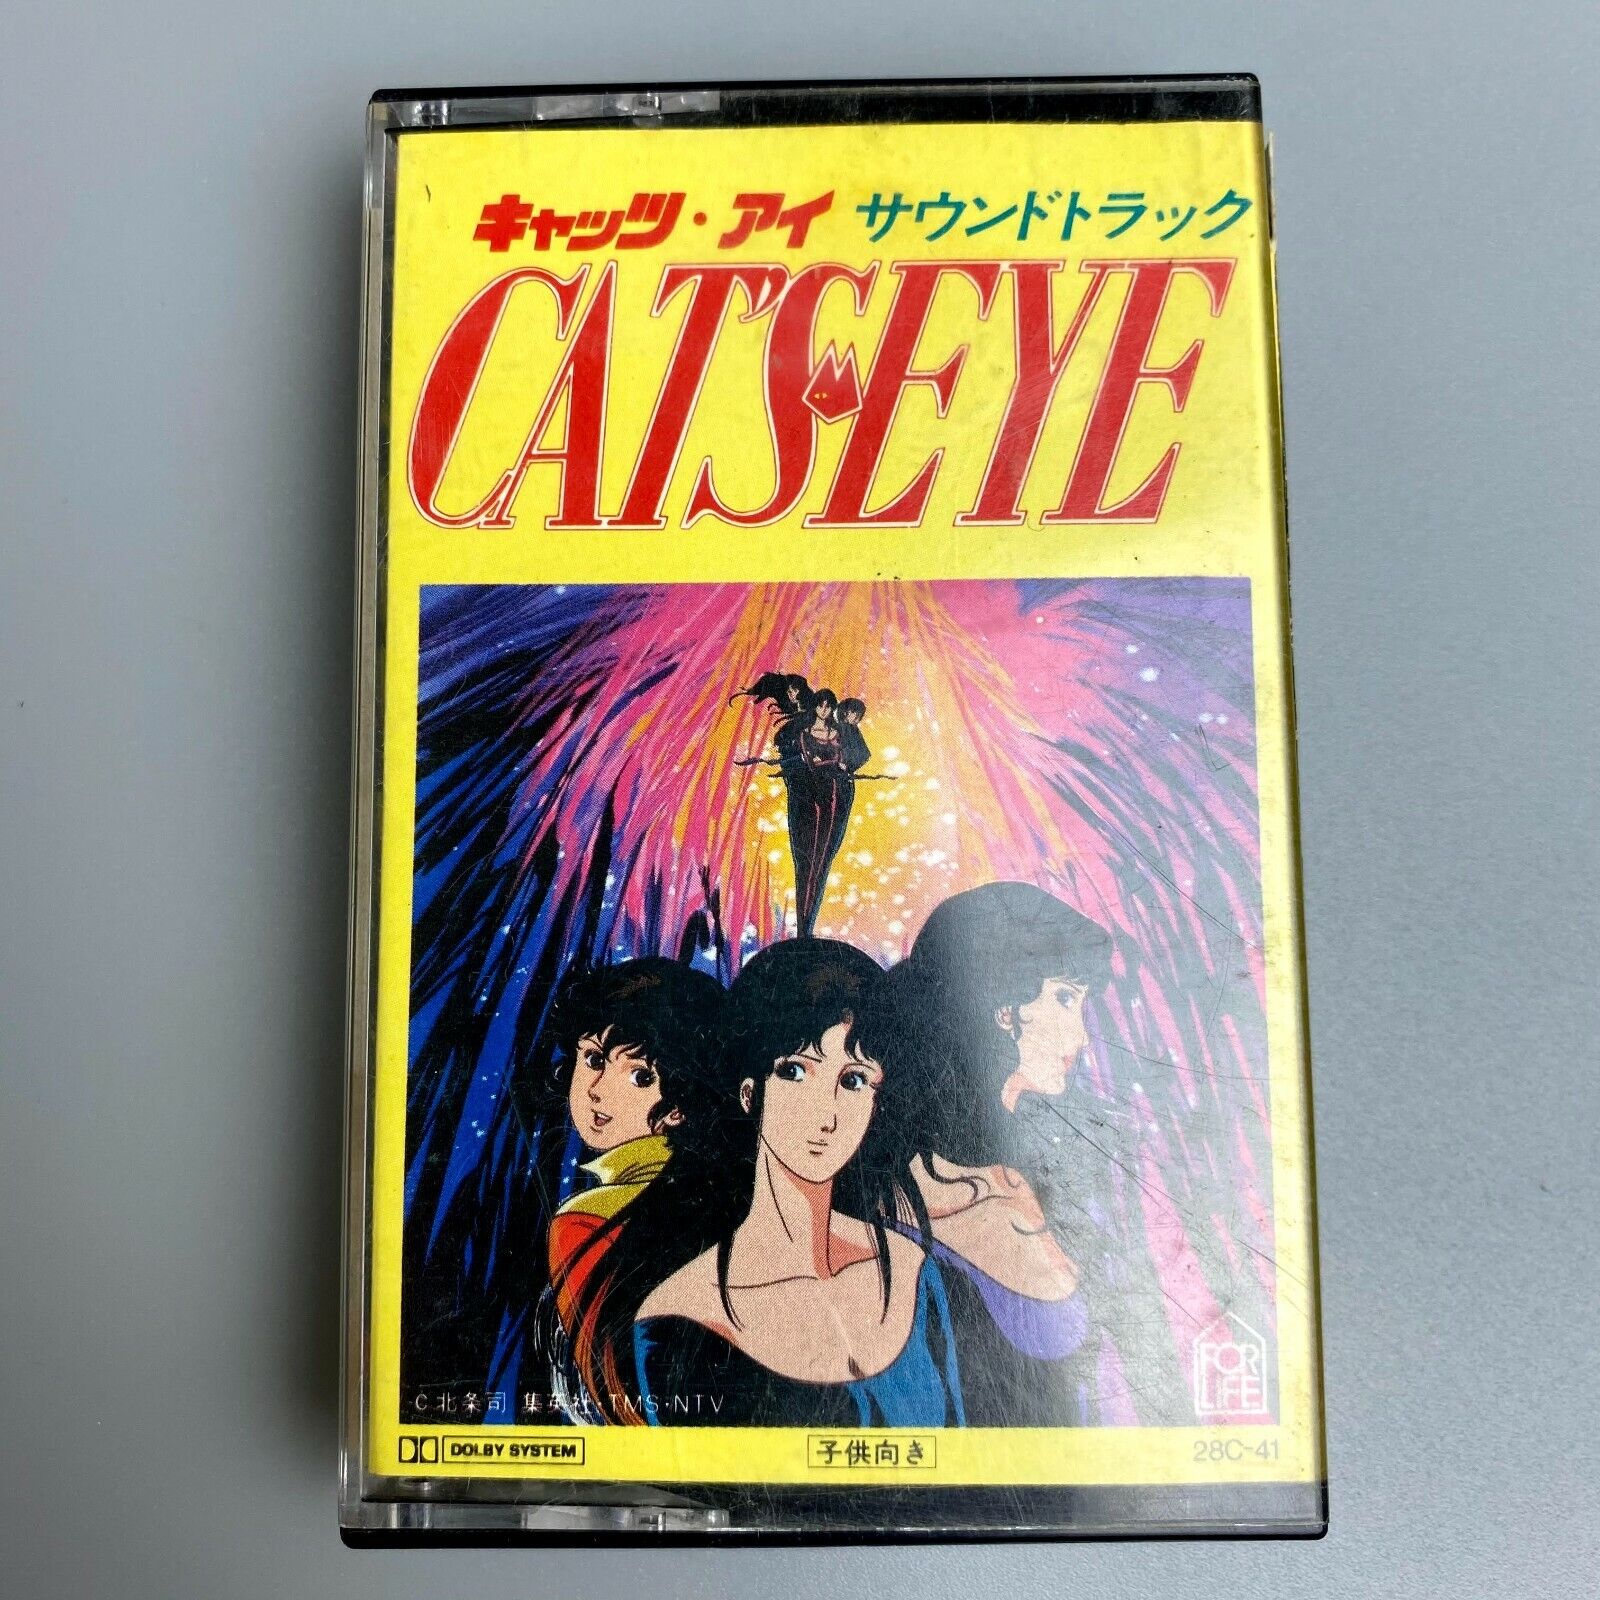 RARE 1983 CATs EYE soundtrack cassette tape album vintage anime japan